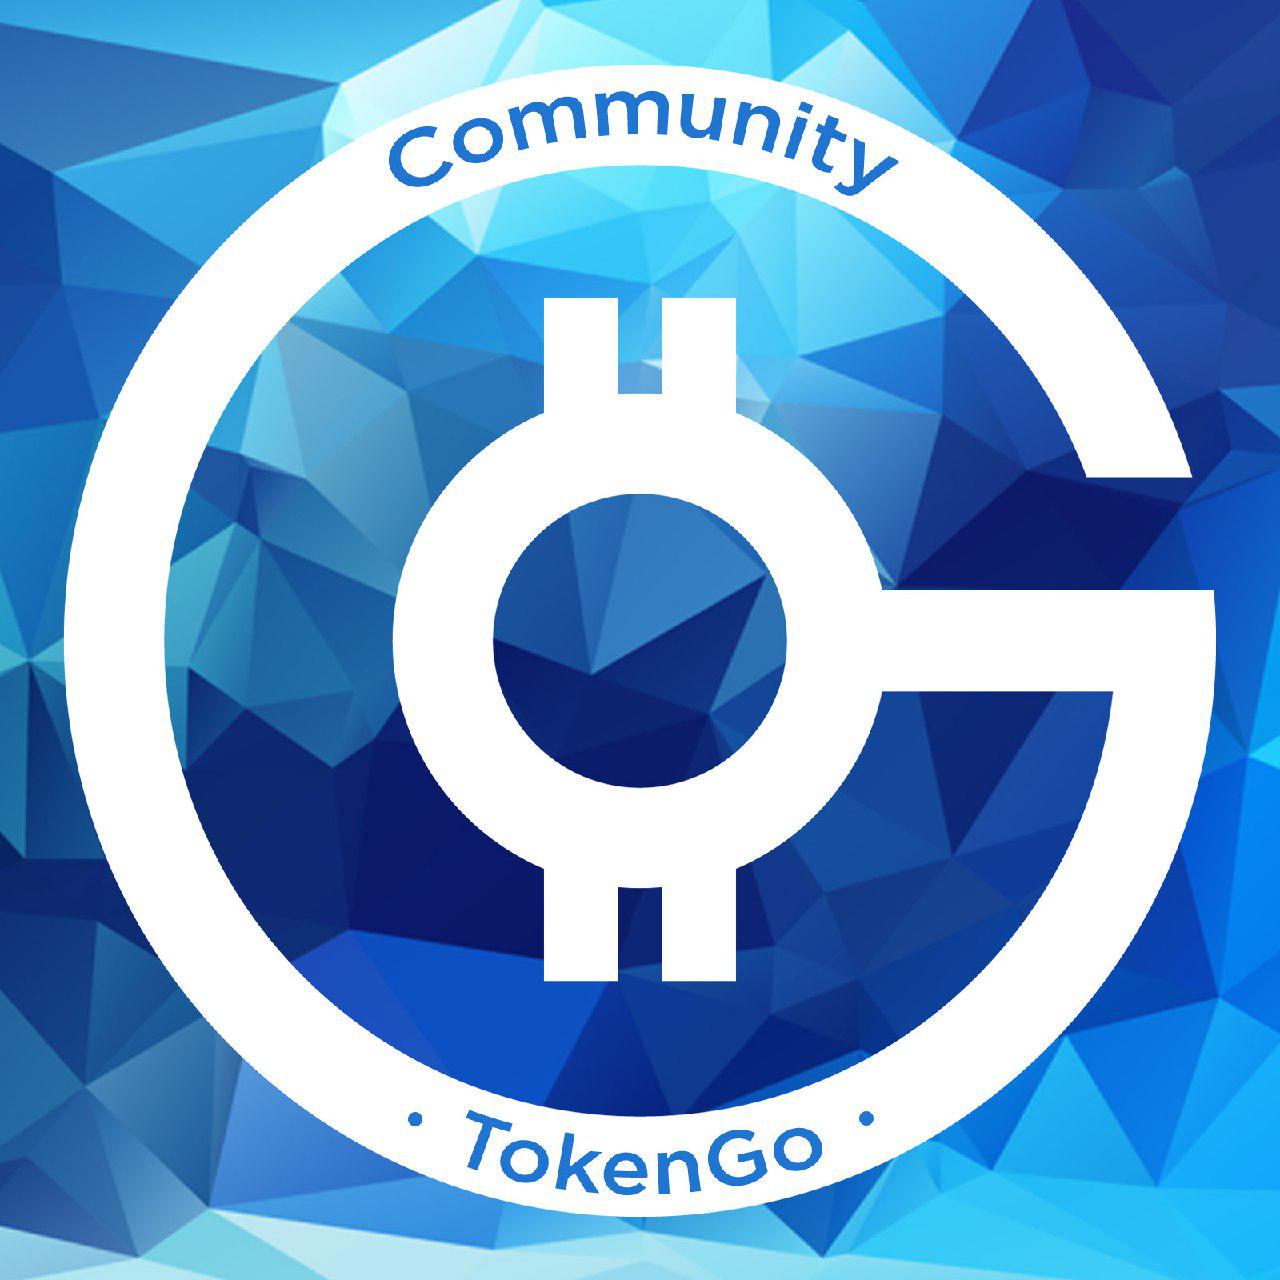 TokenGo_Community4.jpg